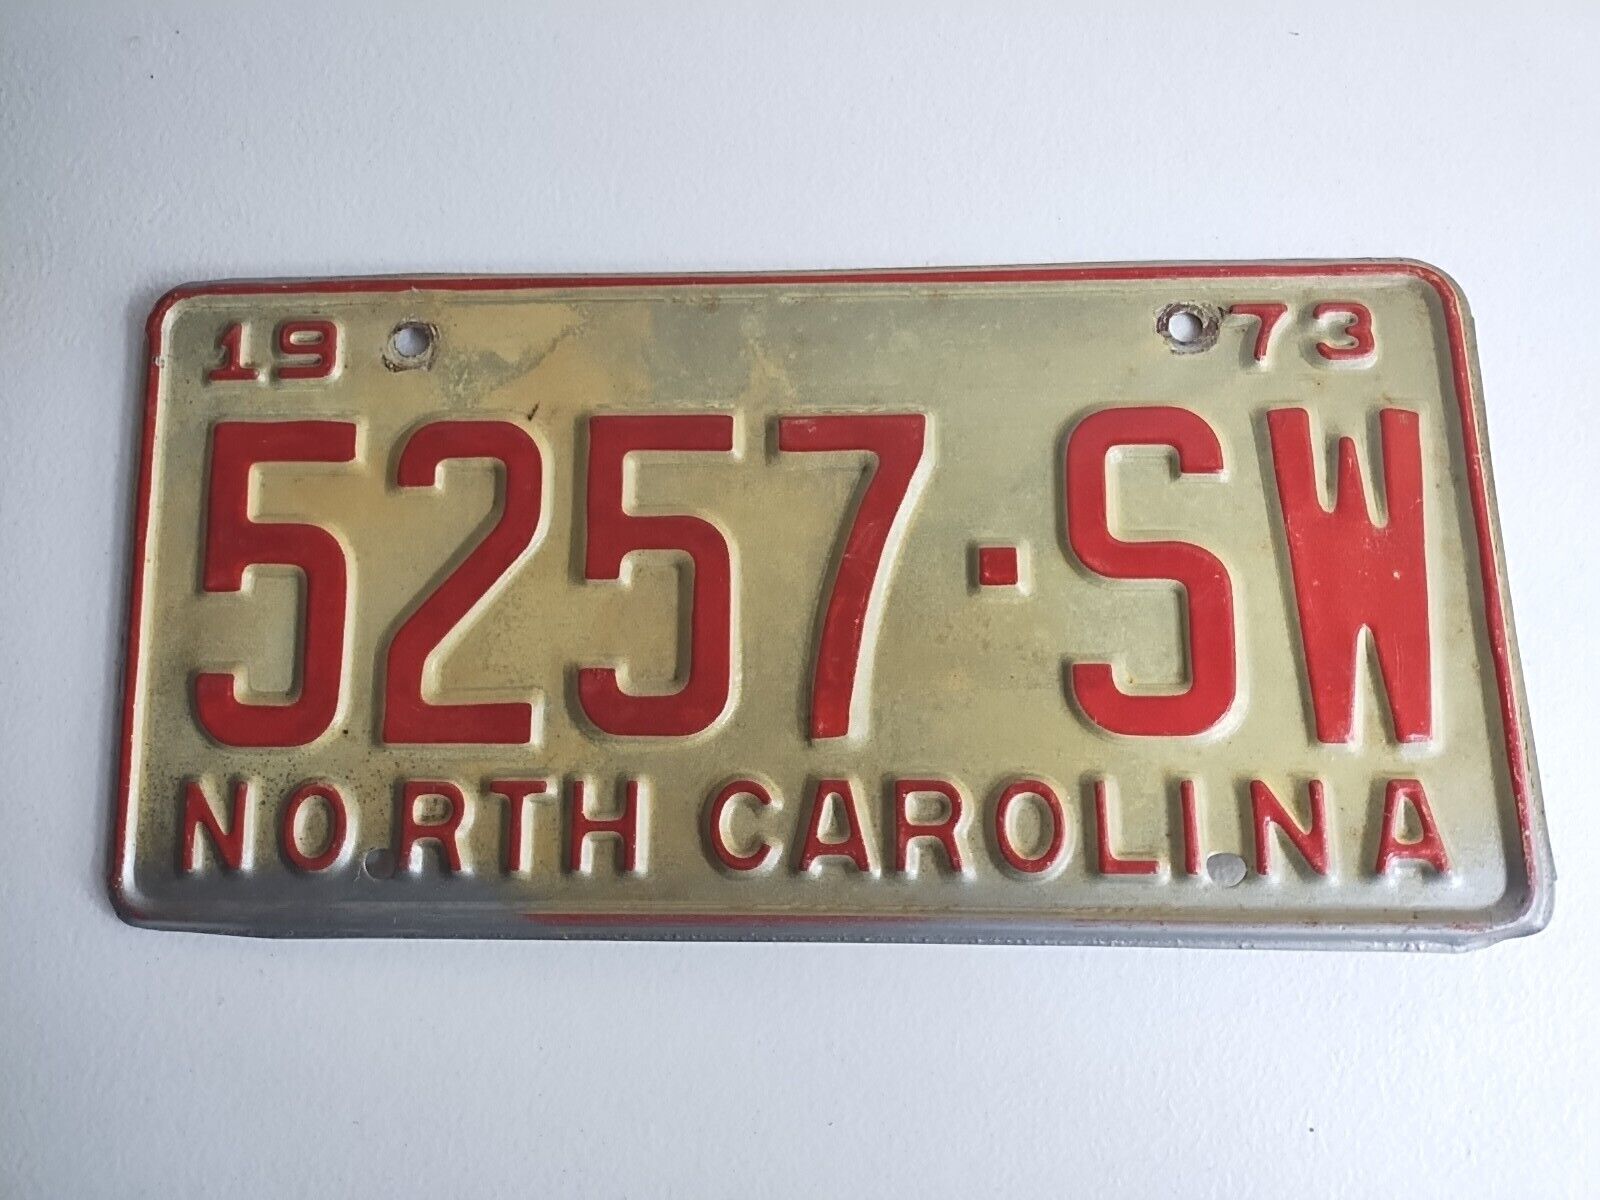 Vintage ORIGINAL 1973 NORTH CAROLINA NC LICENSE PLATE TAG 5257-SW RED ON WHITE